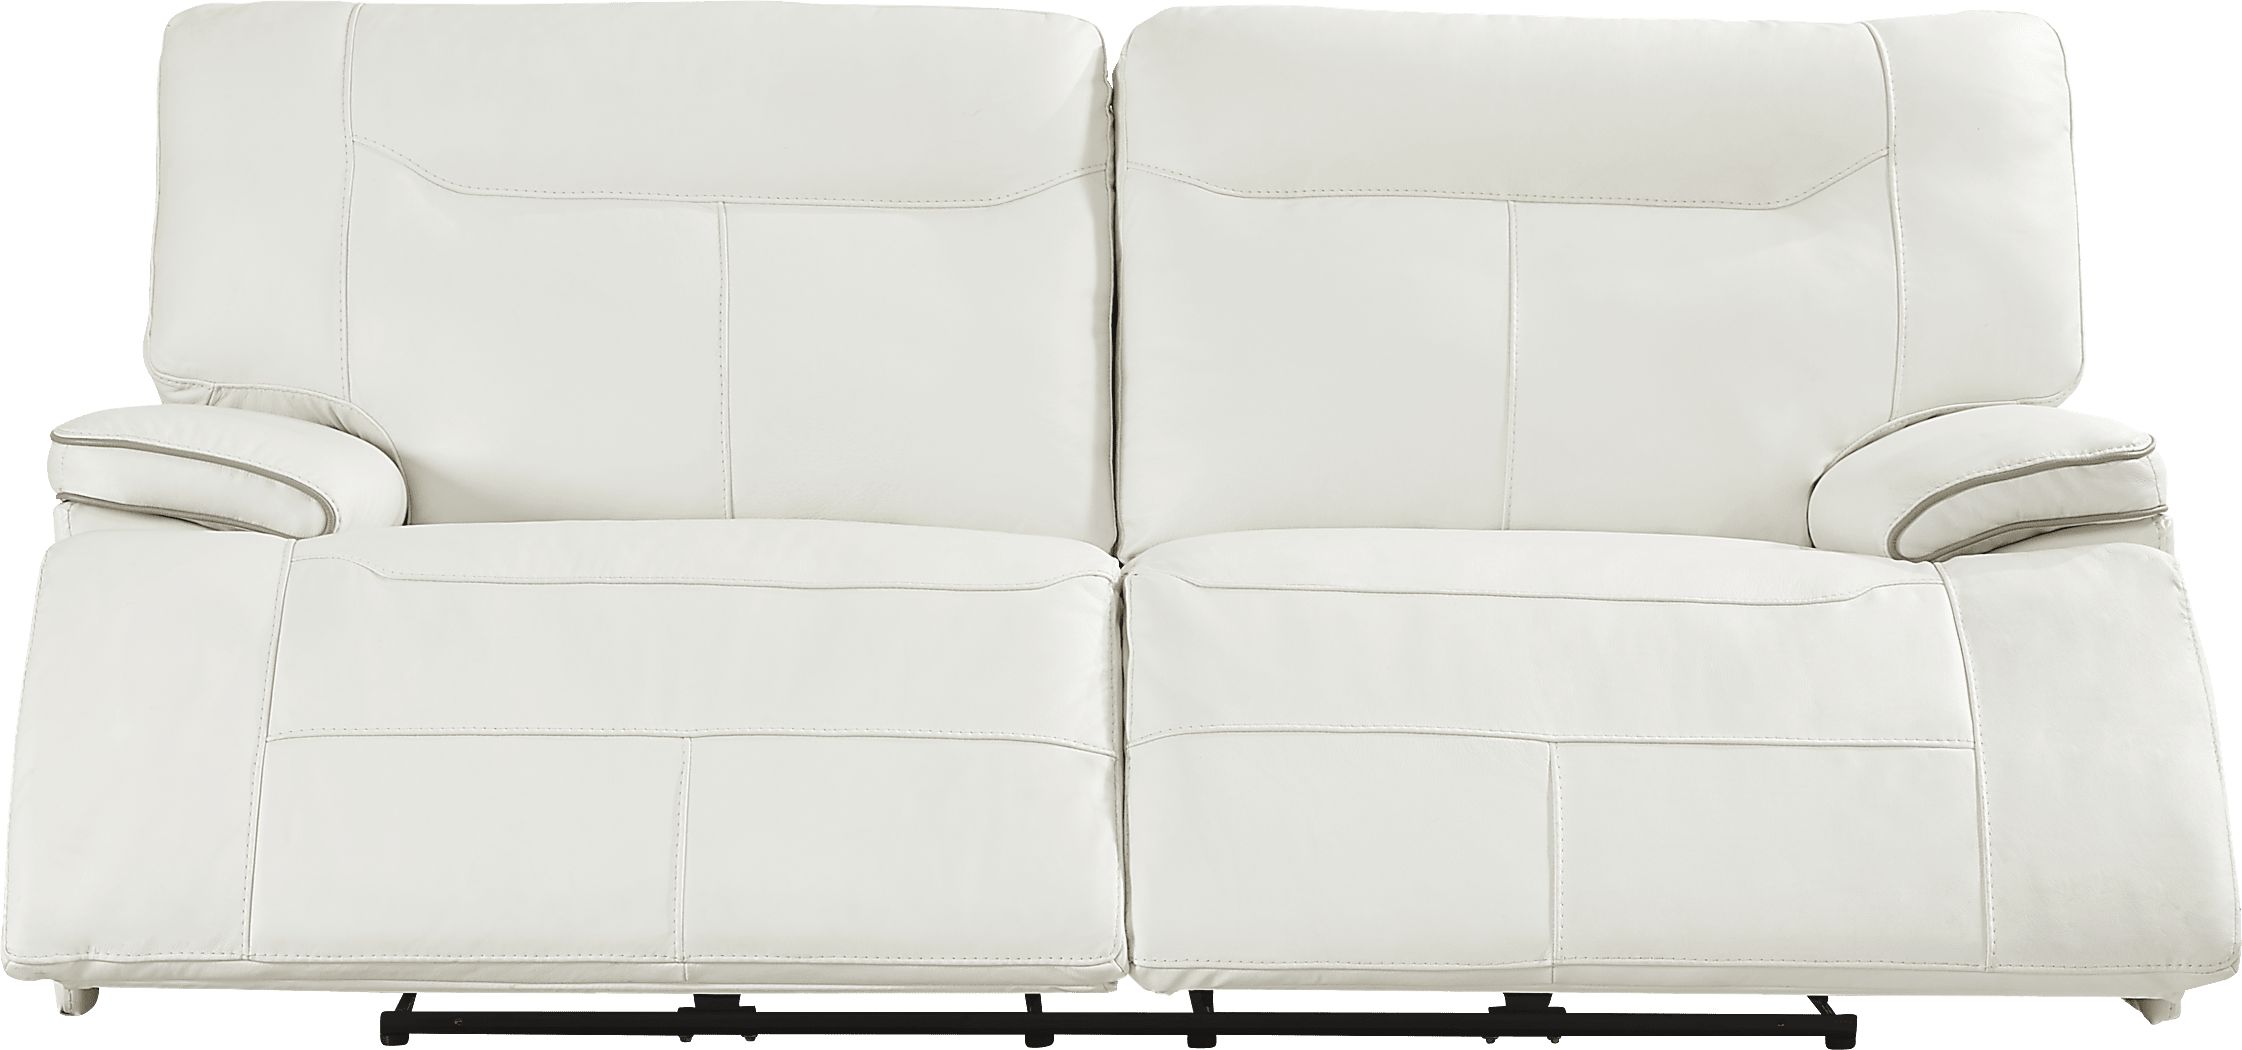 Cindy Crawford Cindy Crawford Home Bernsley White Leather Dual Power Reclining Sofa